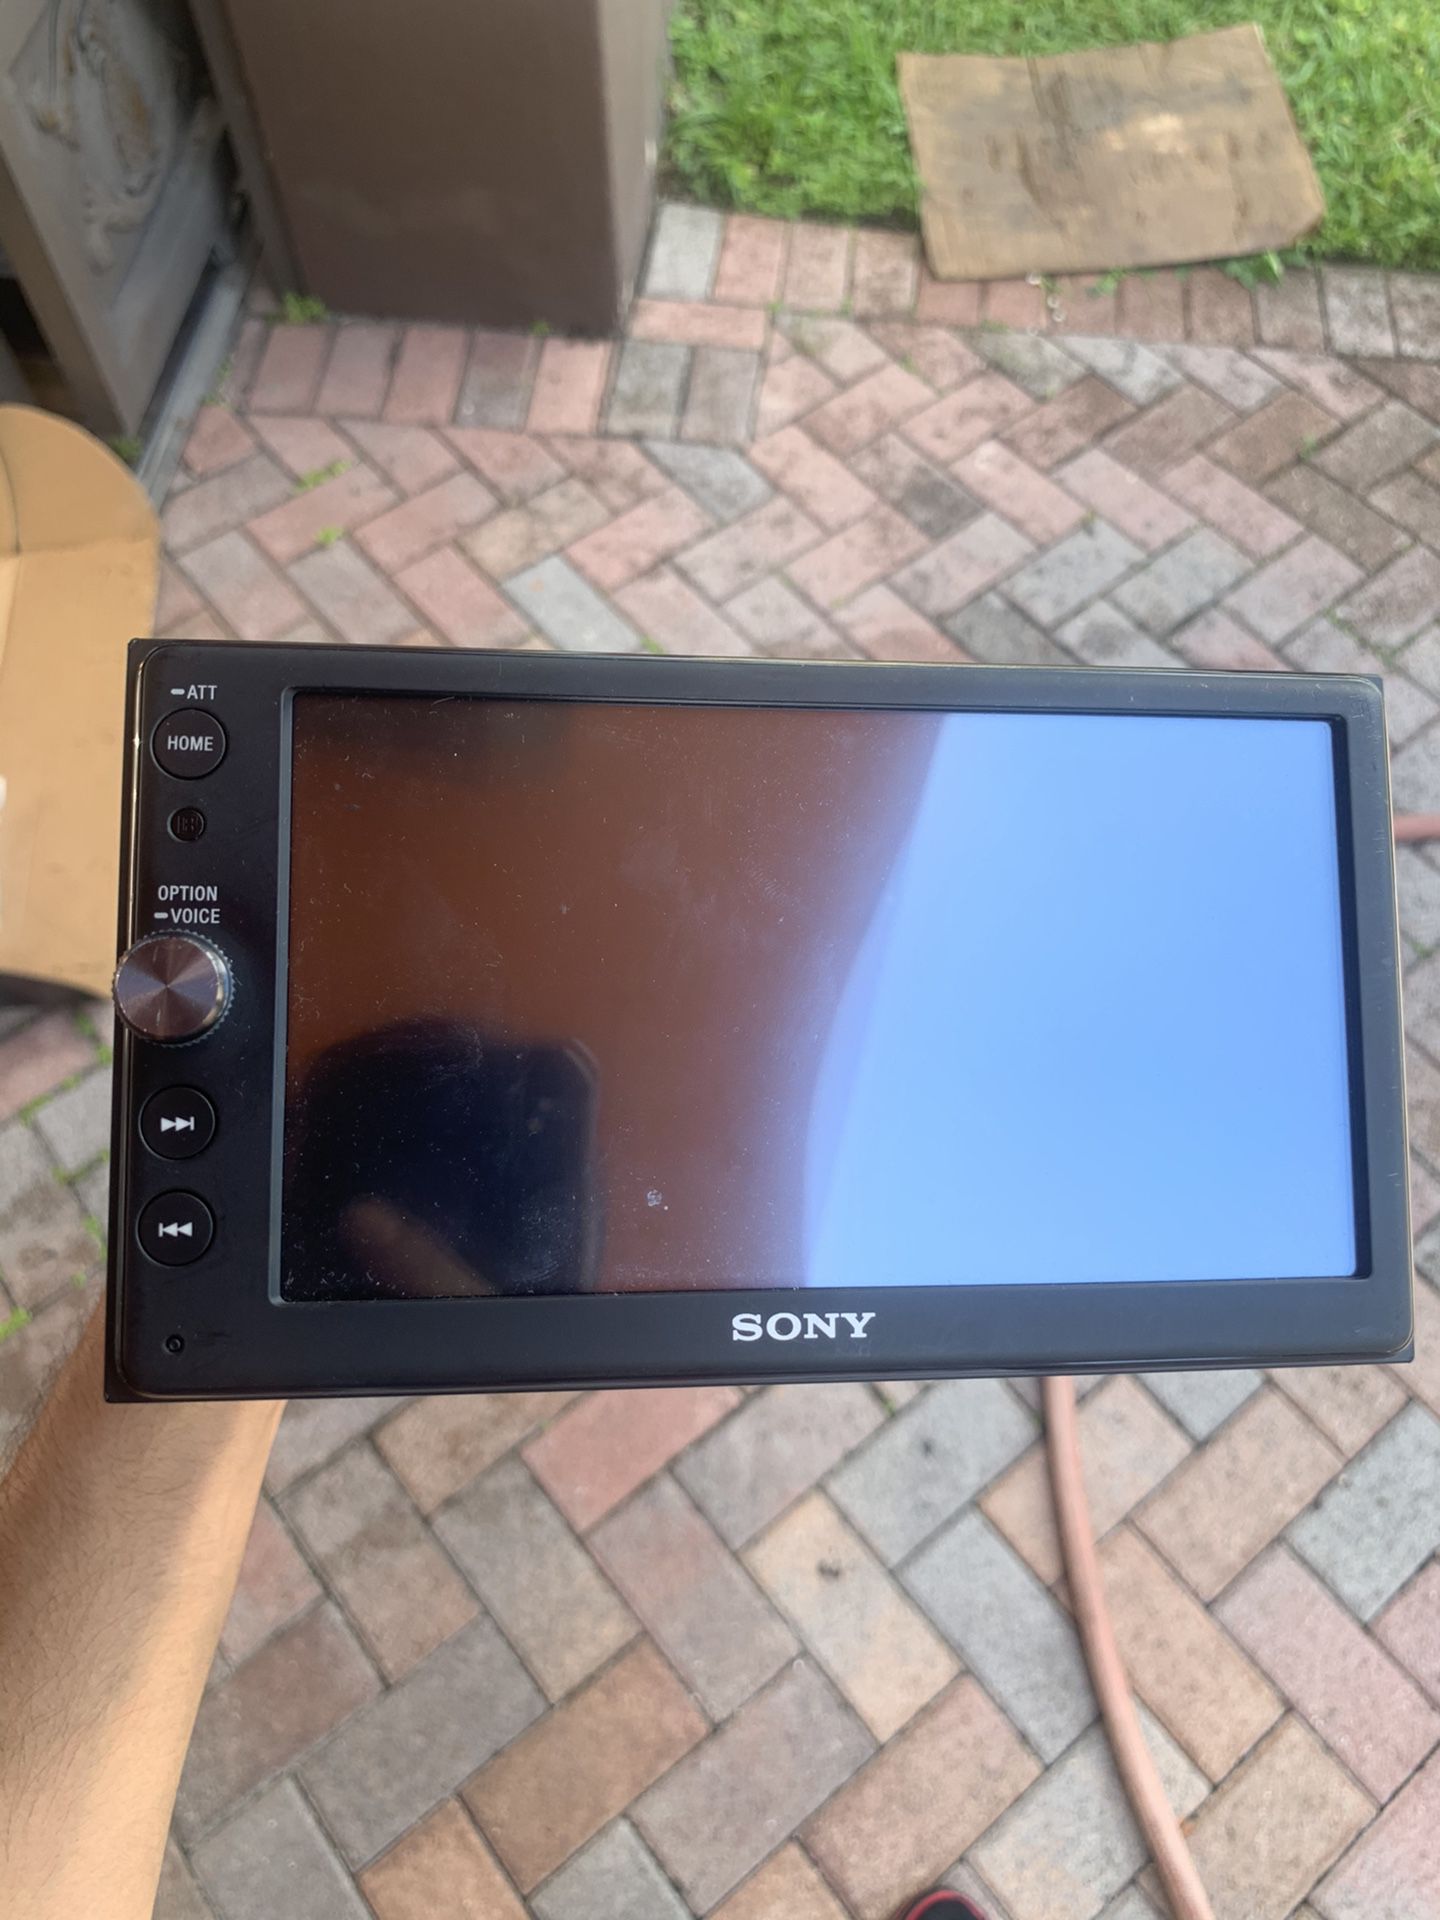 Sony 6.4" Touchscreen Media Receiver